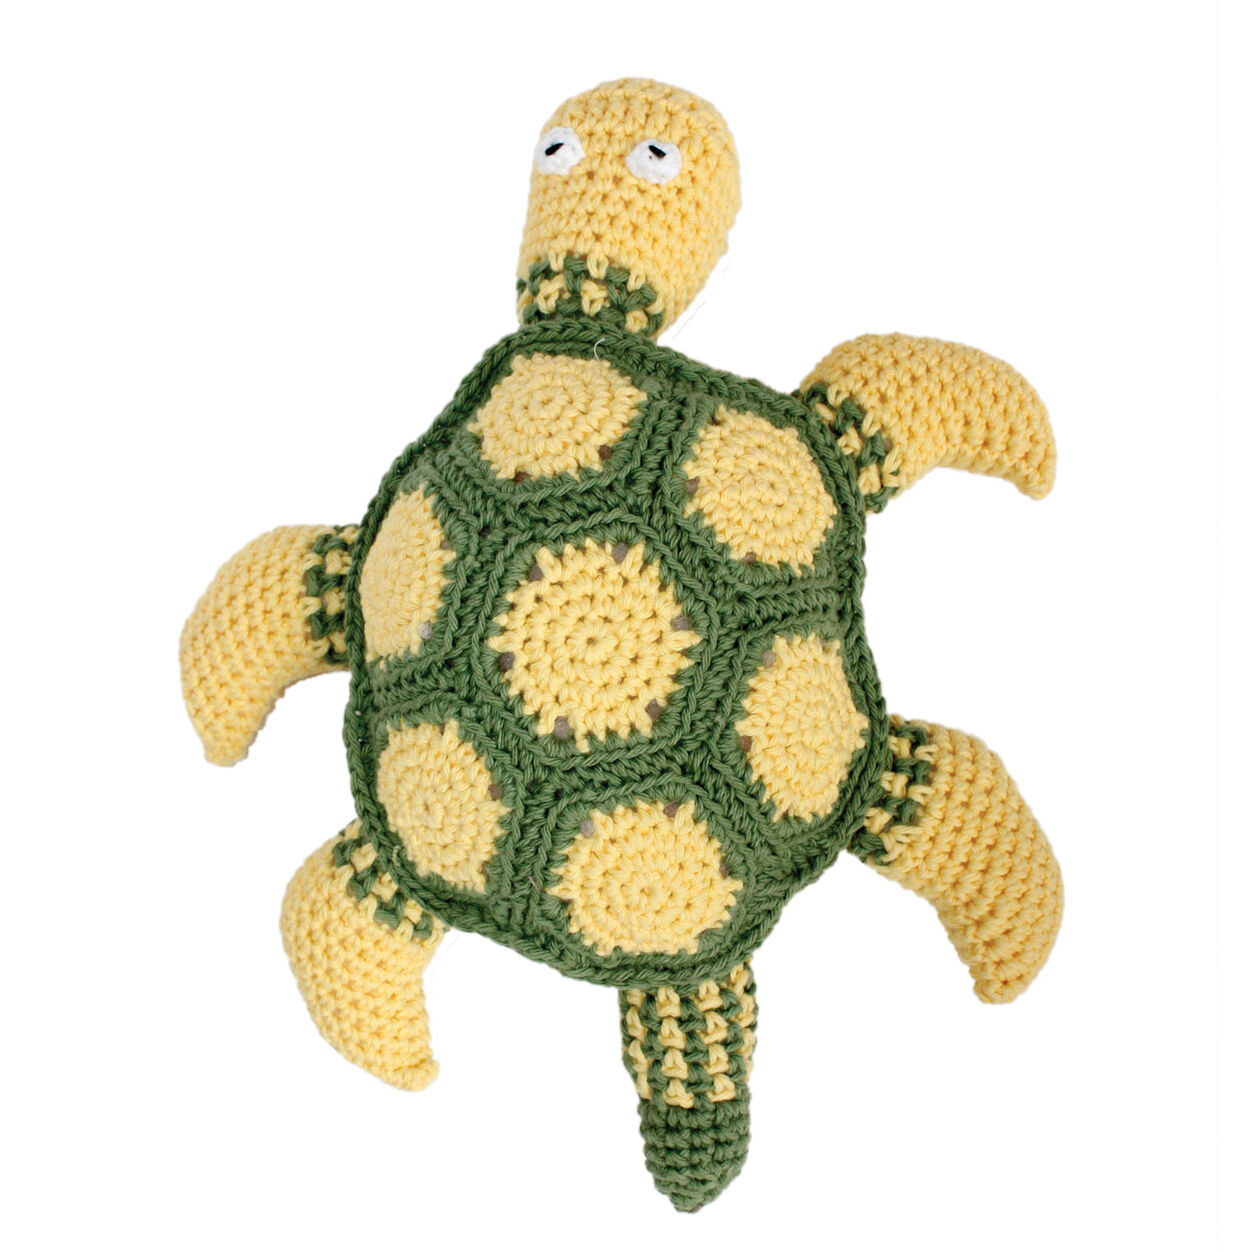 5 Free Crochet Turtle Patterns - Marly Bird